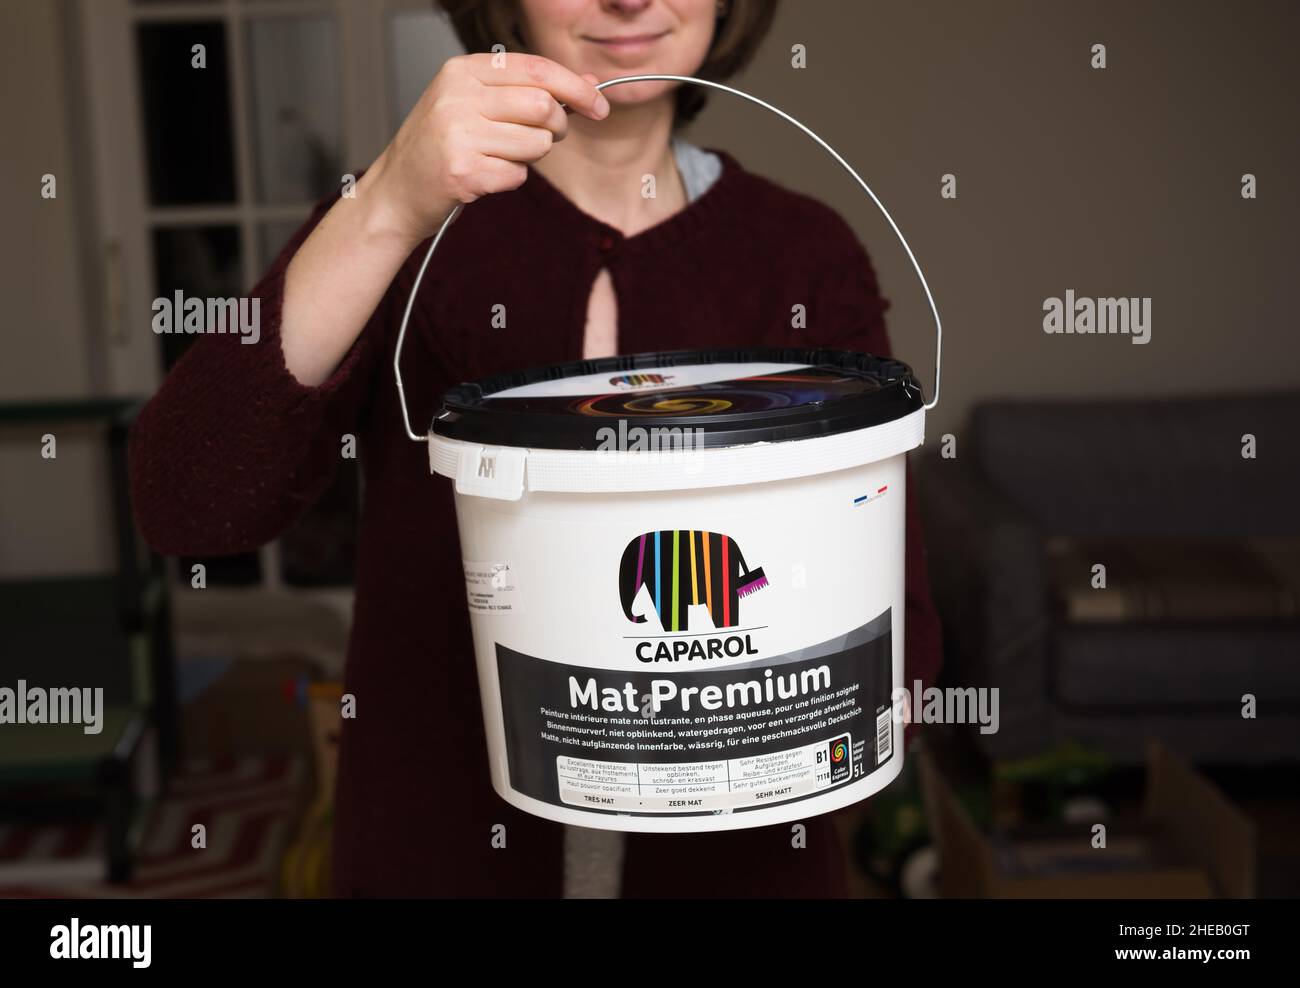 Paris, France - Dec 8, 2021: Young woman holding new plastic package bucket of Caparol Mat Premium luxury German paint Stock Photo